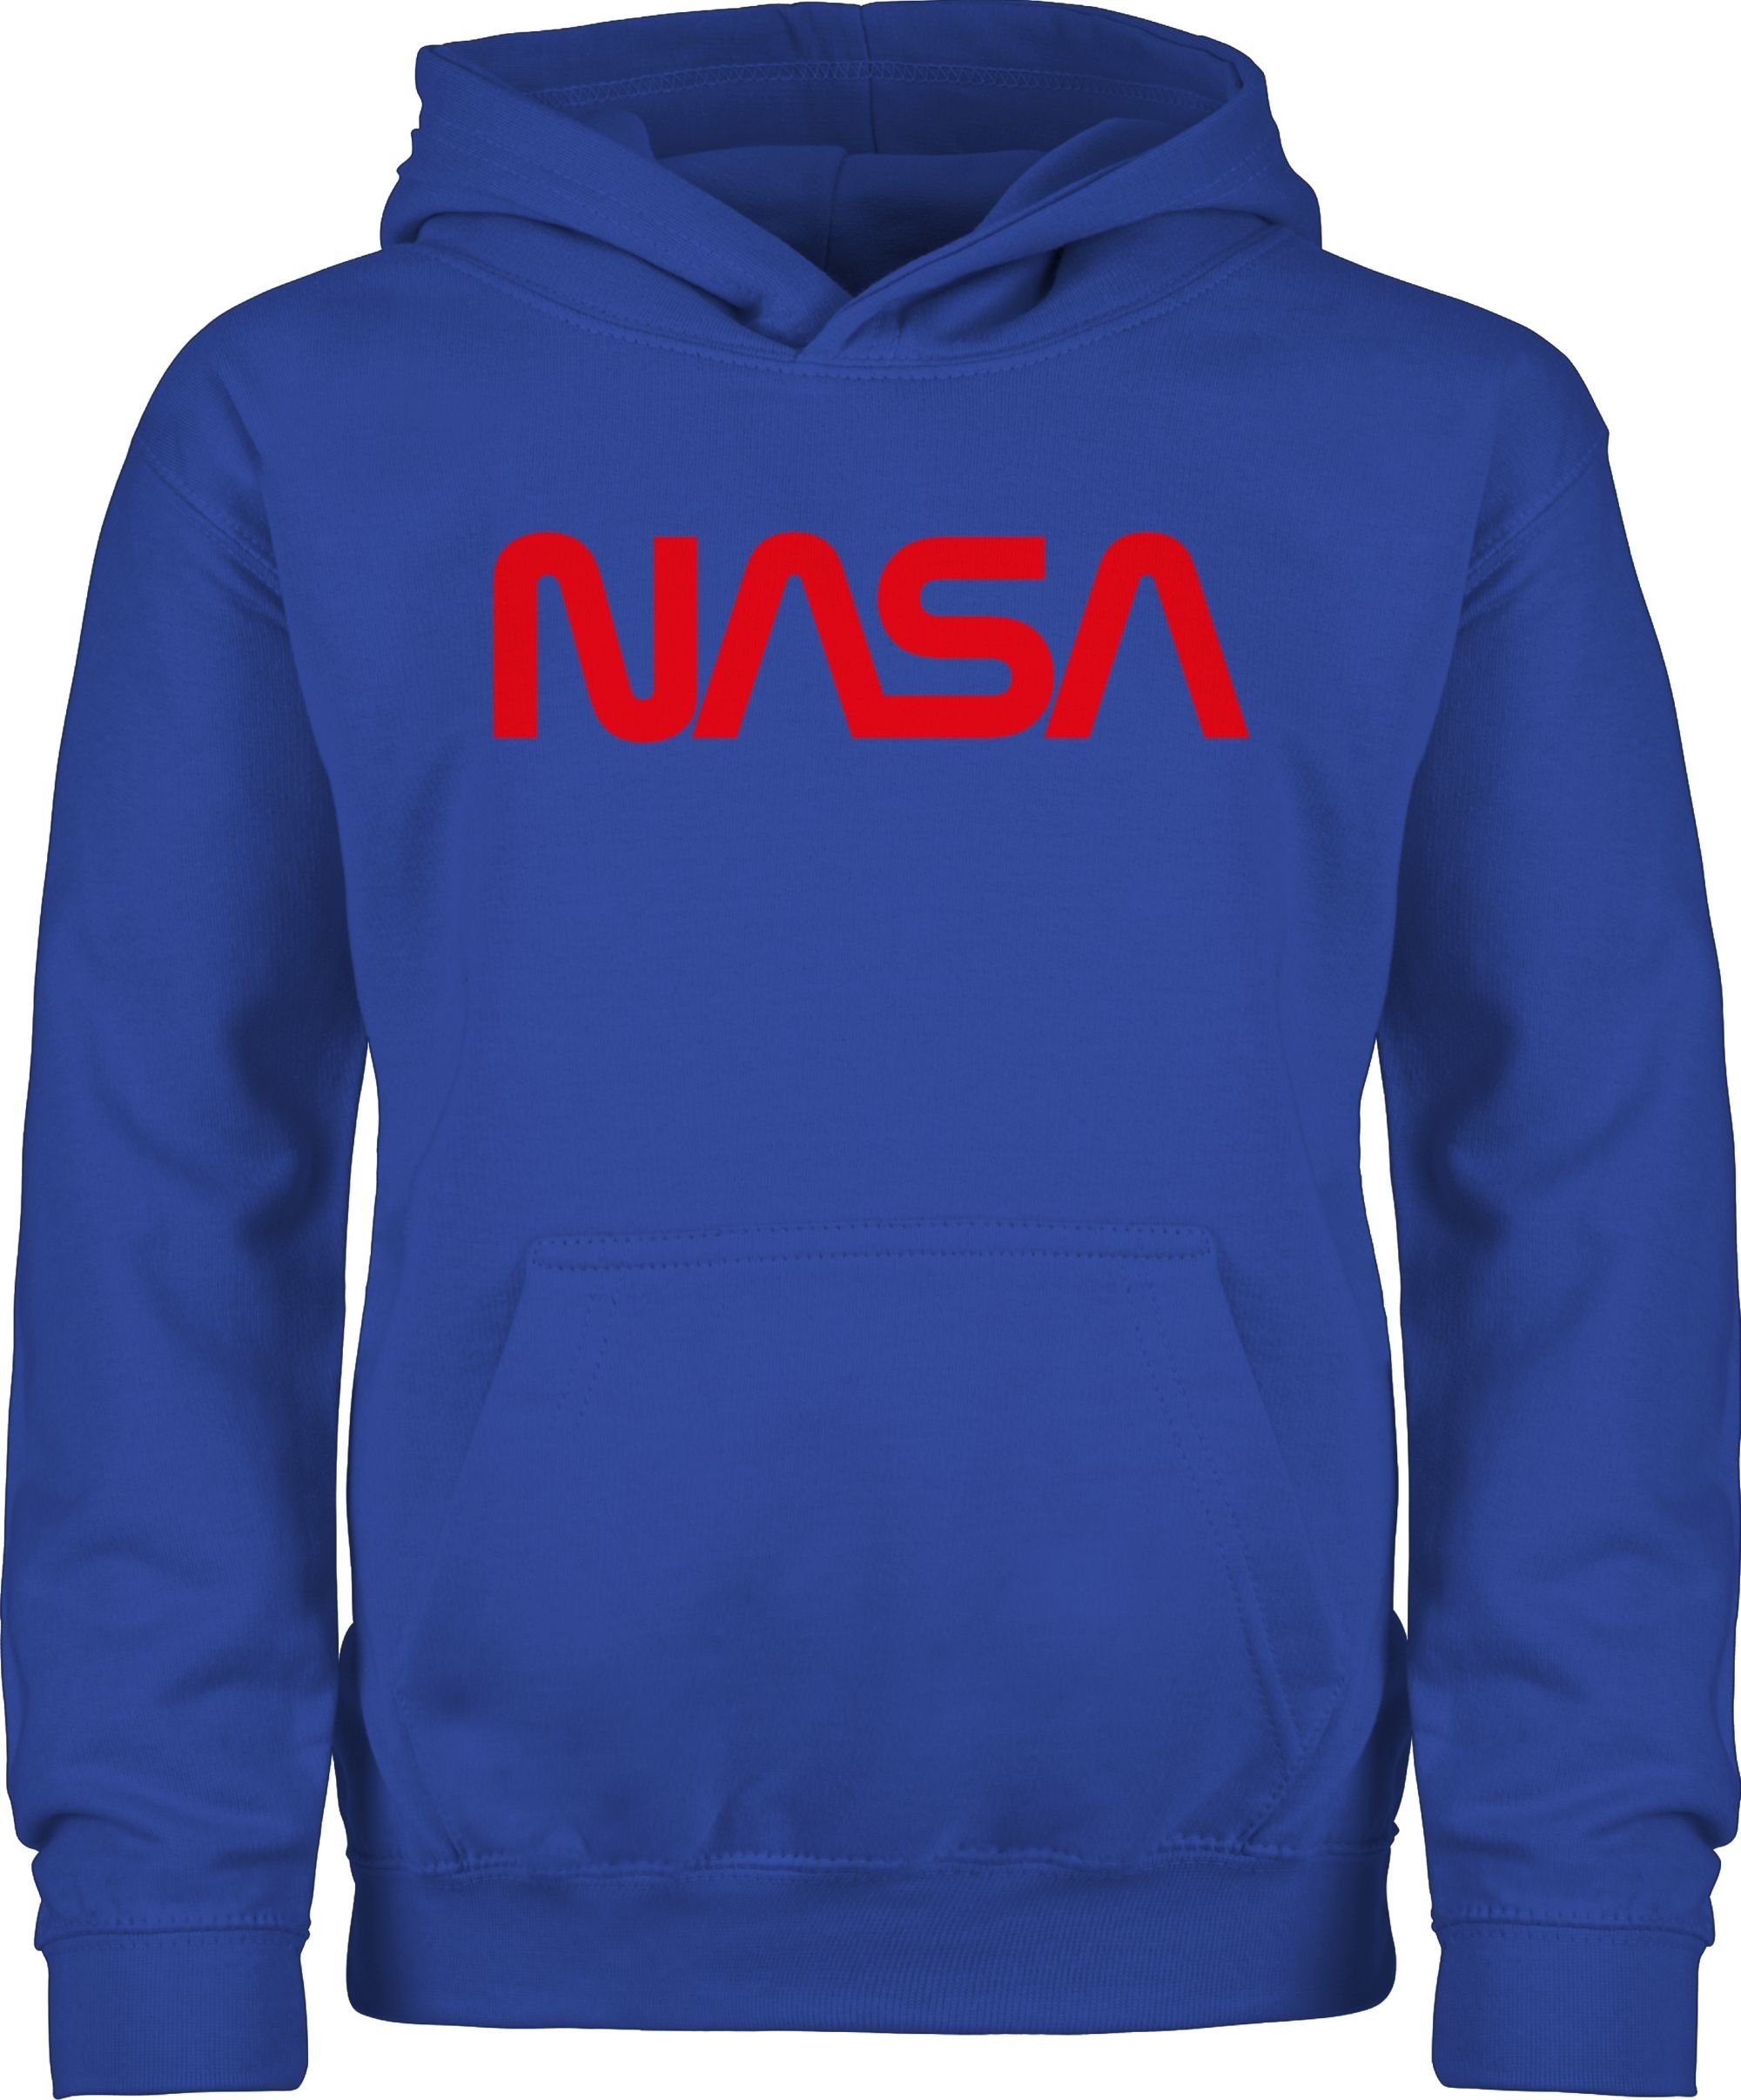 Shirtracer Hoodie Nasa - Raumfahrt Astronaut Mondlandung Weltraum Kinderkleidung und Co 2 Royalblau